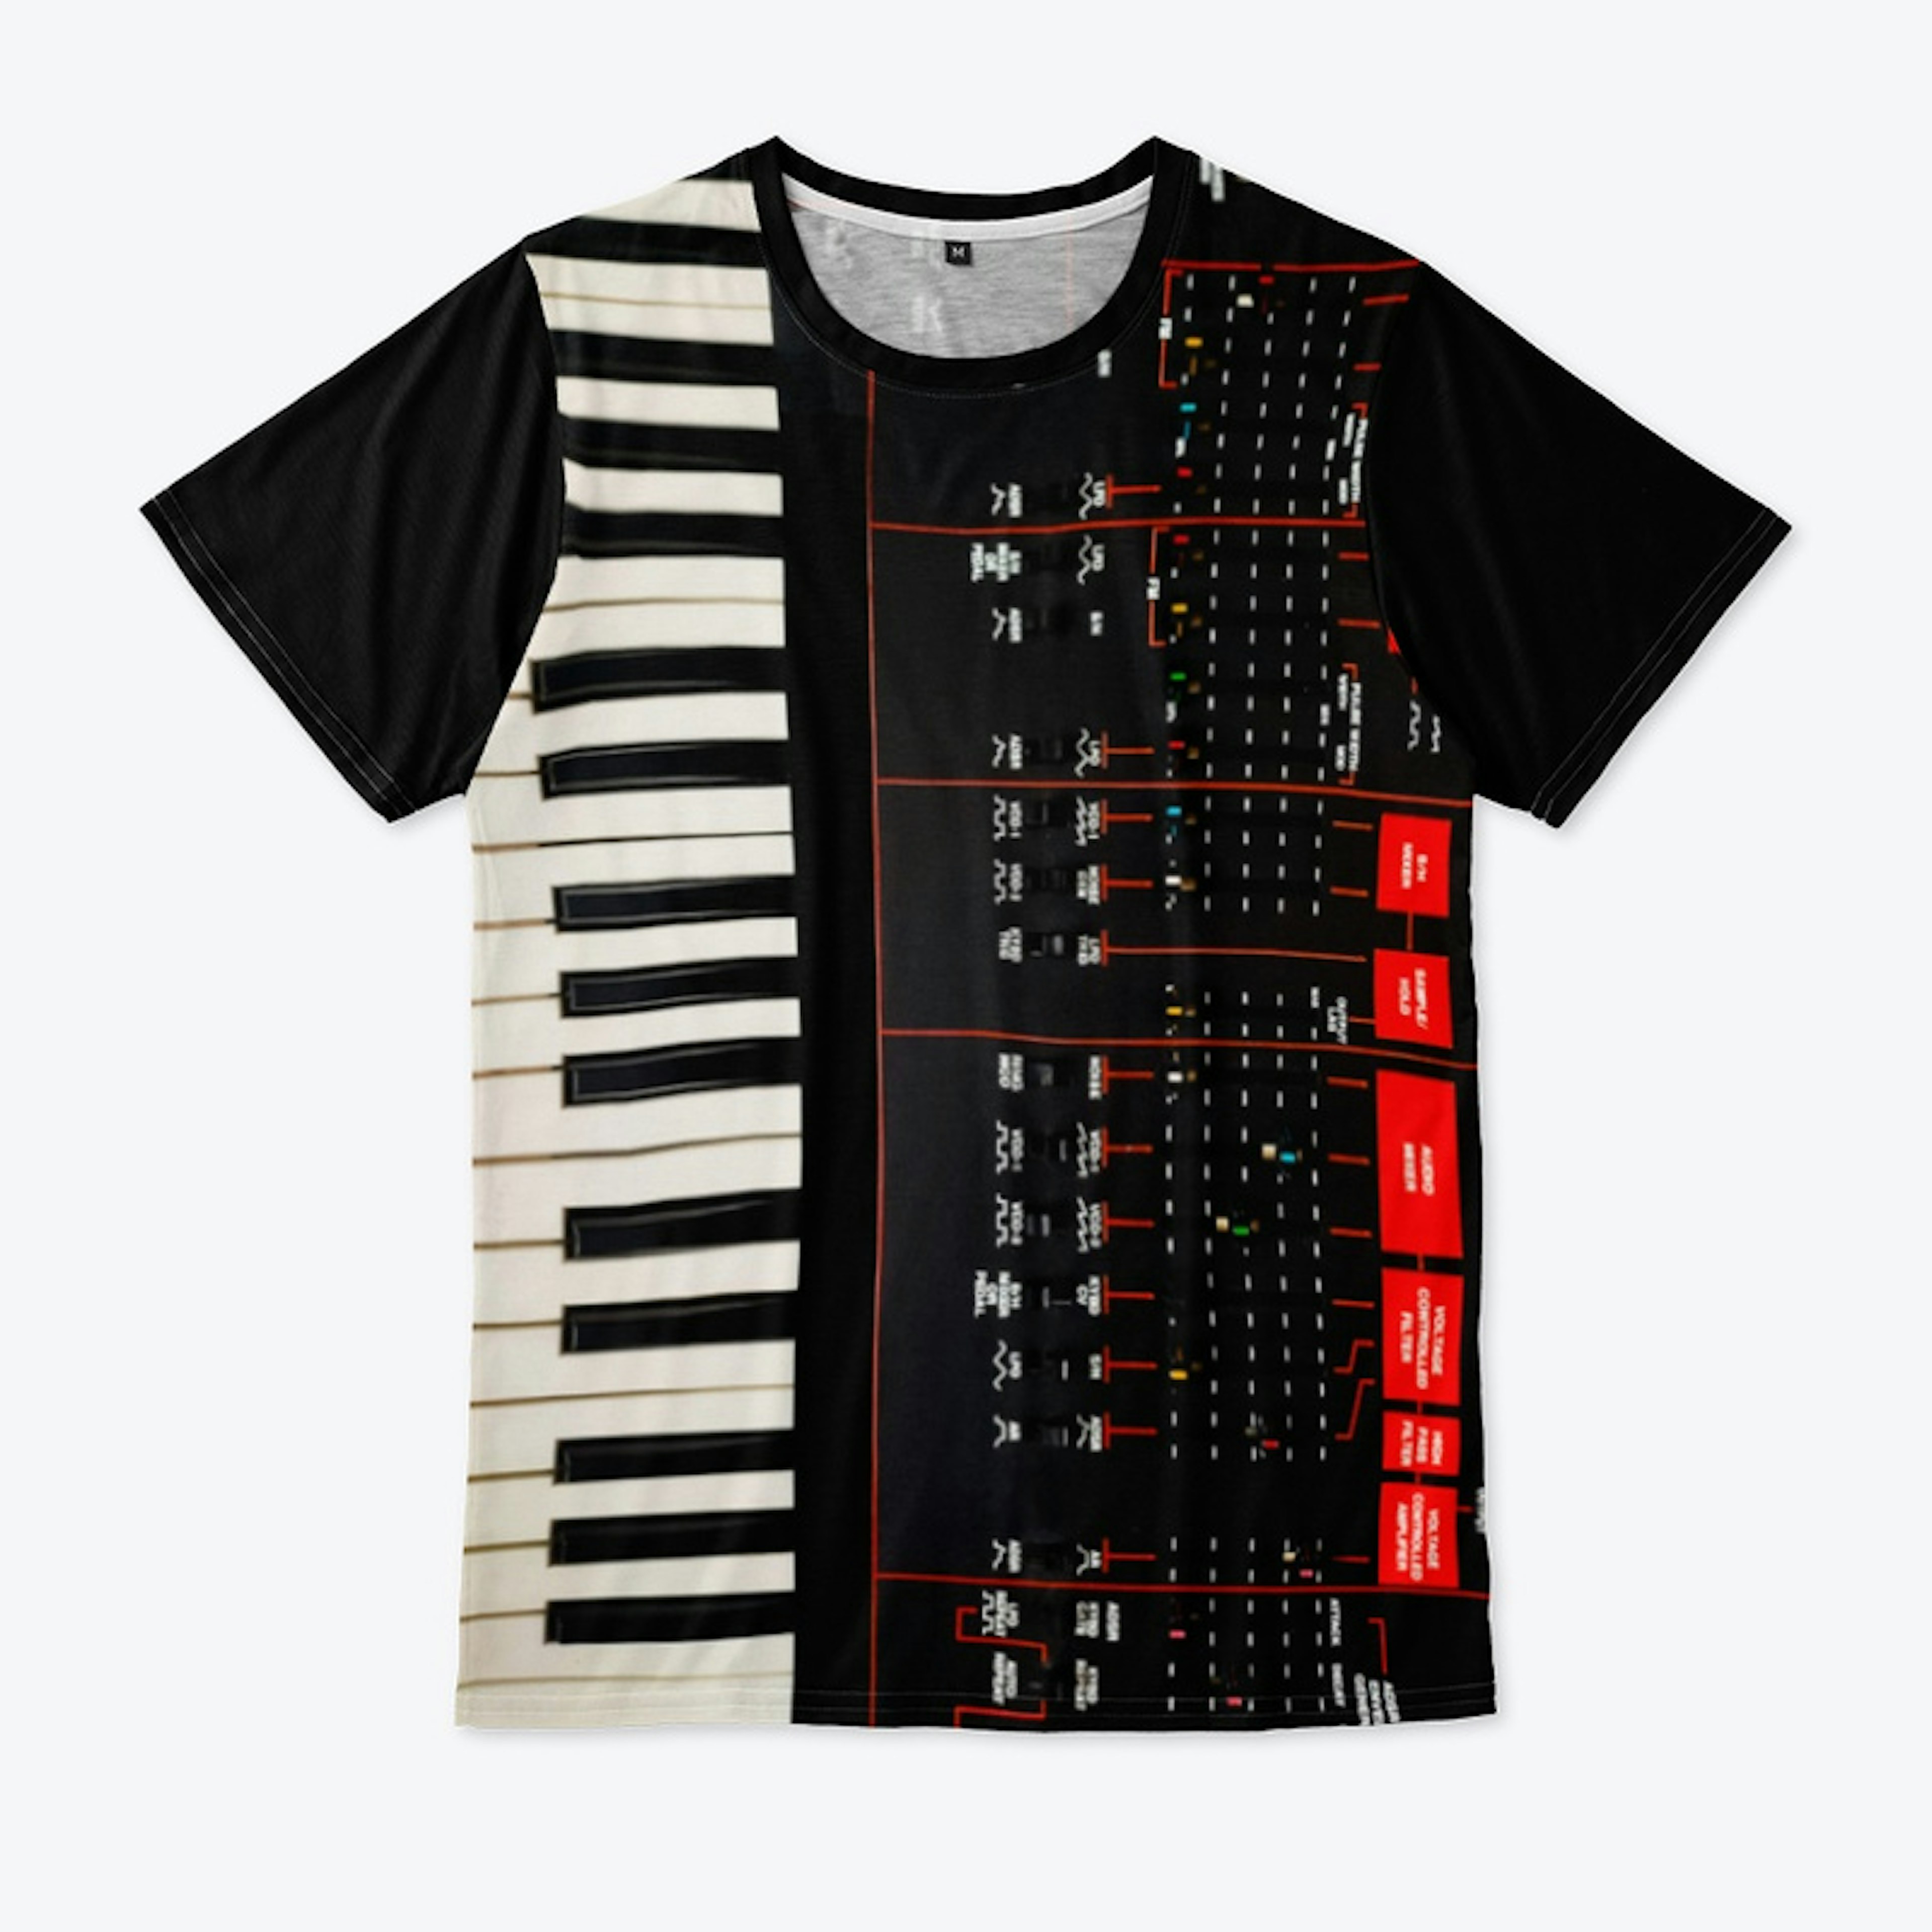 70s Synthesizer Shirt